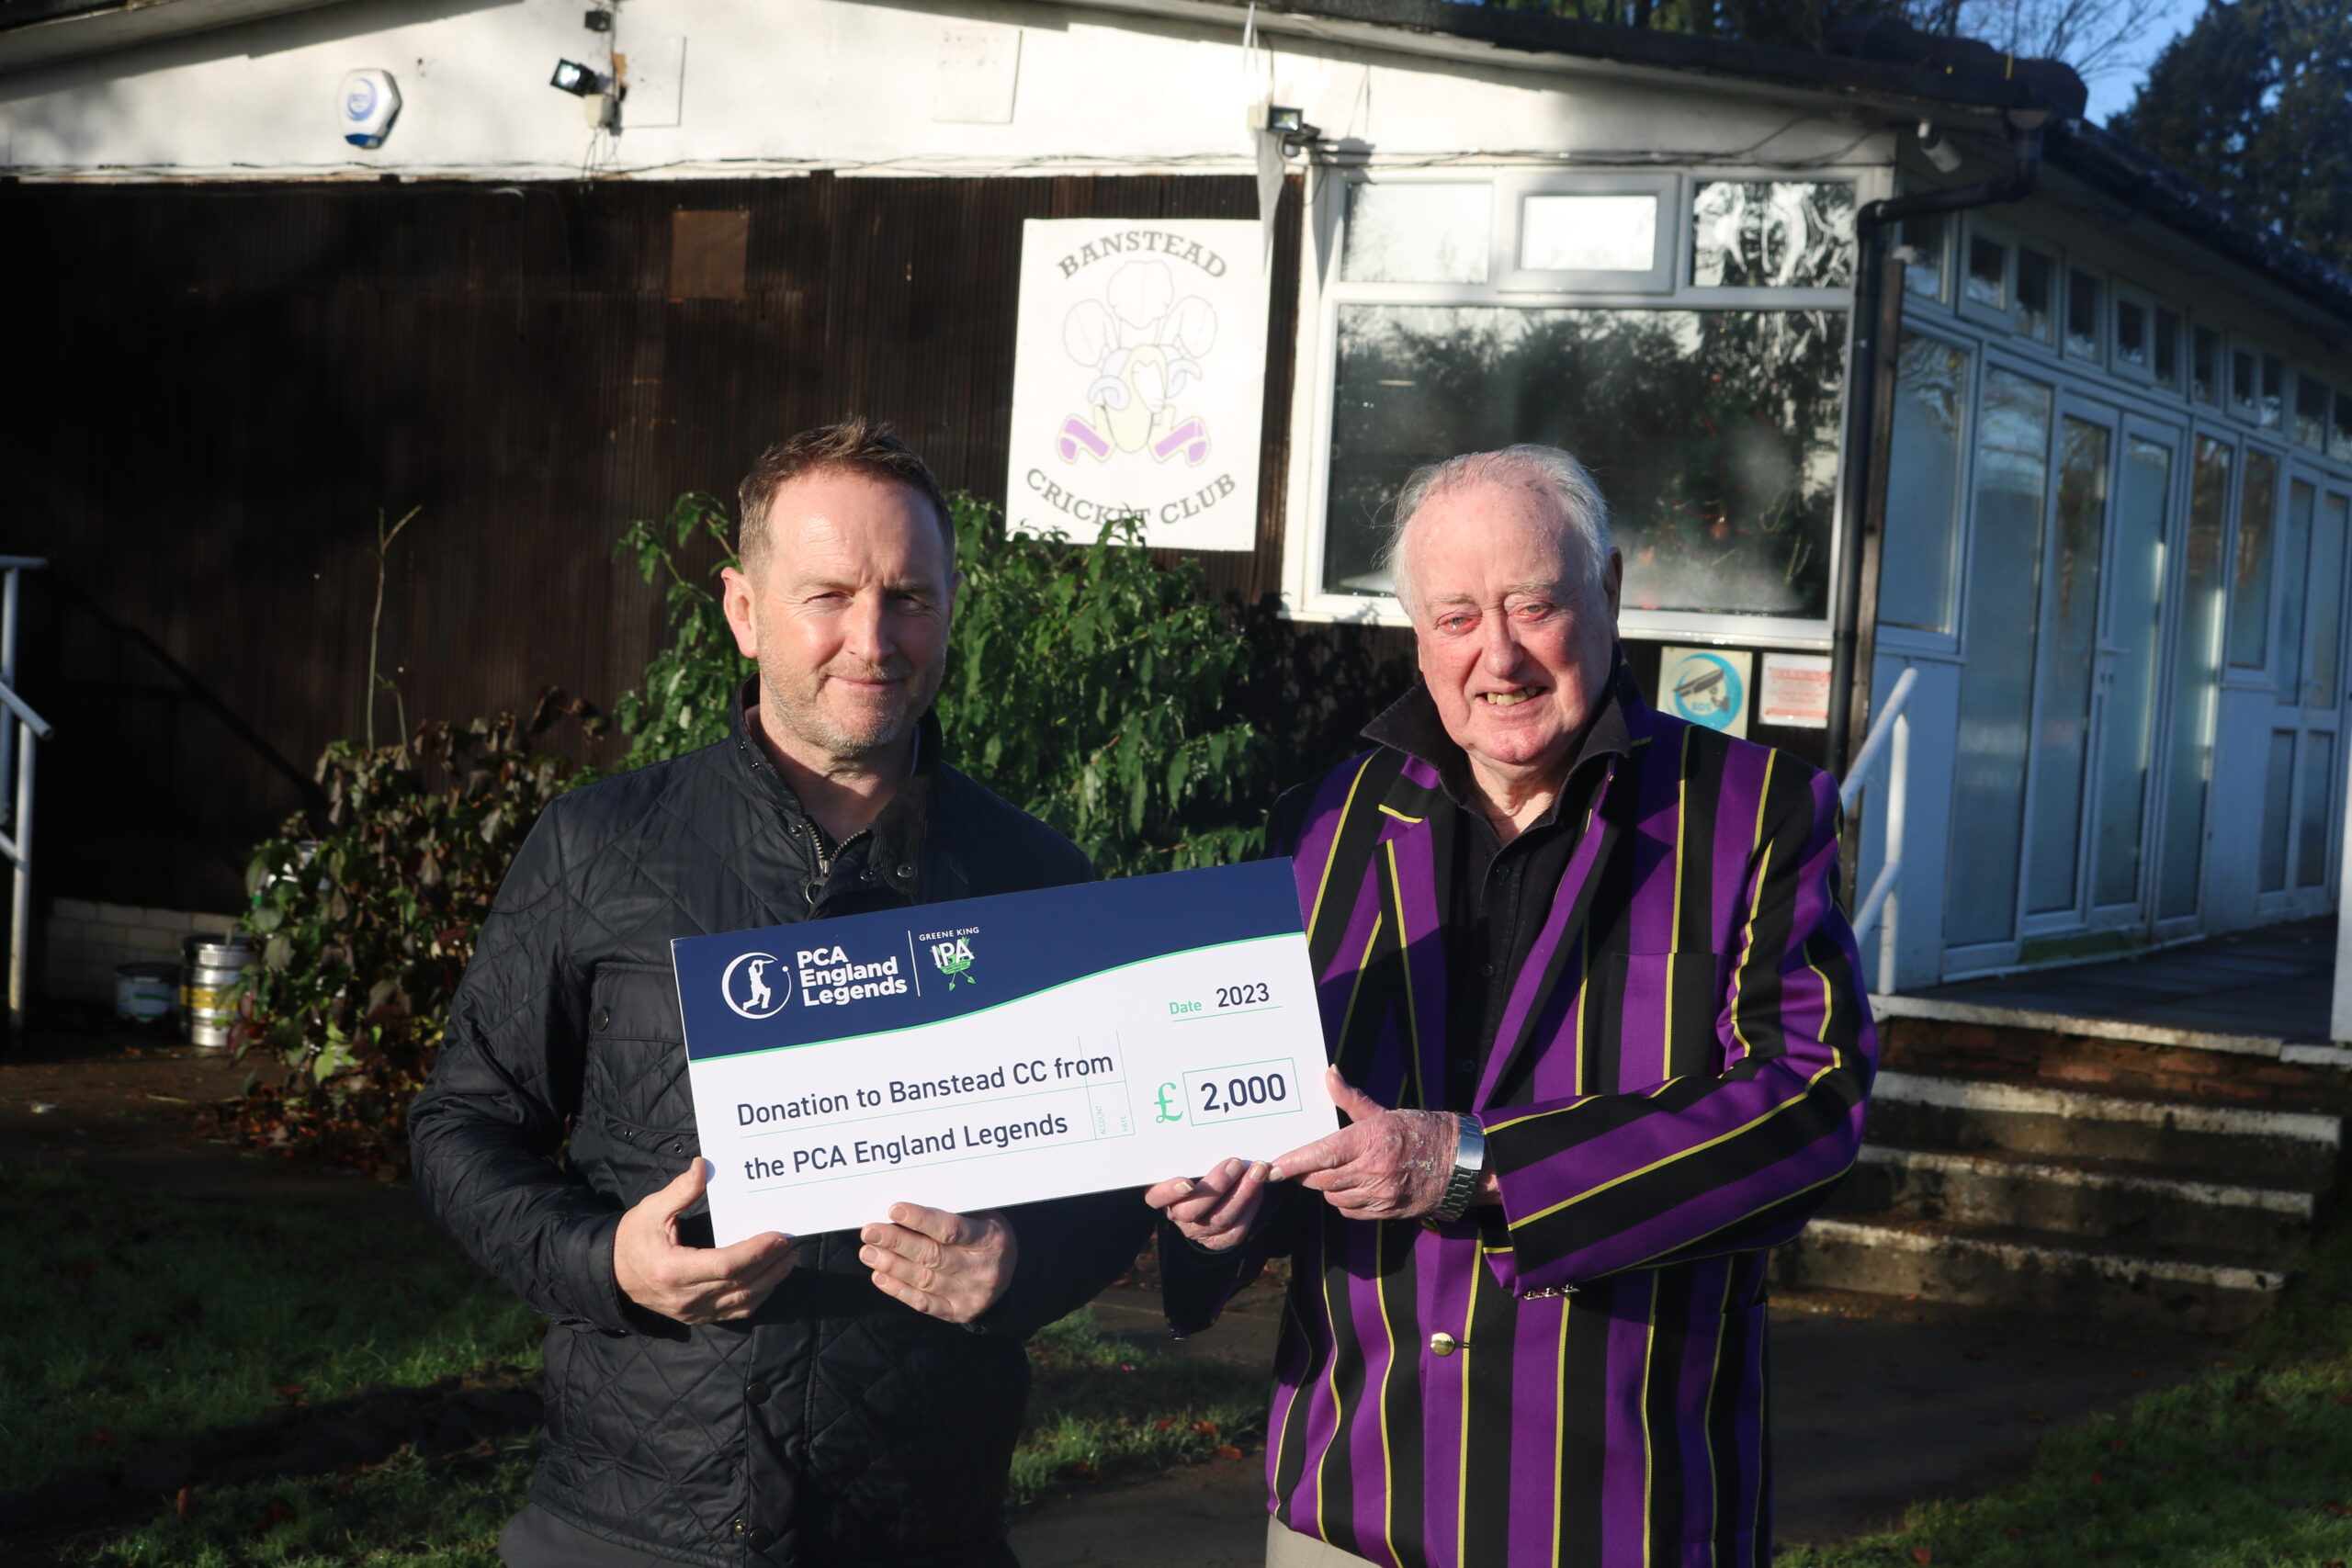 Surrey legend Ali Brown awards £2,000 to Banstead CC